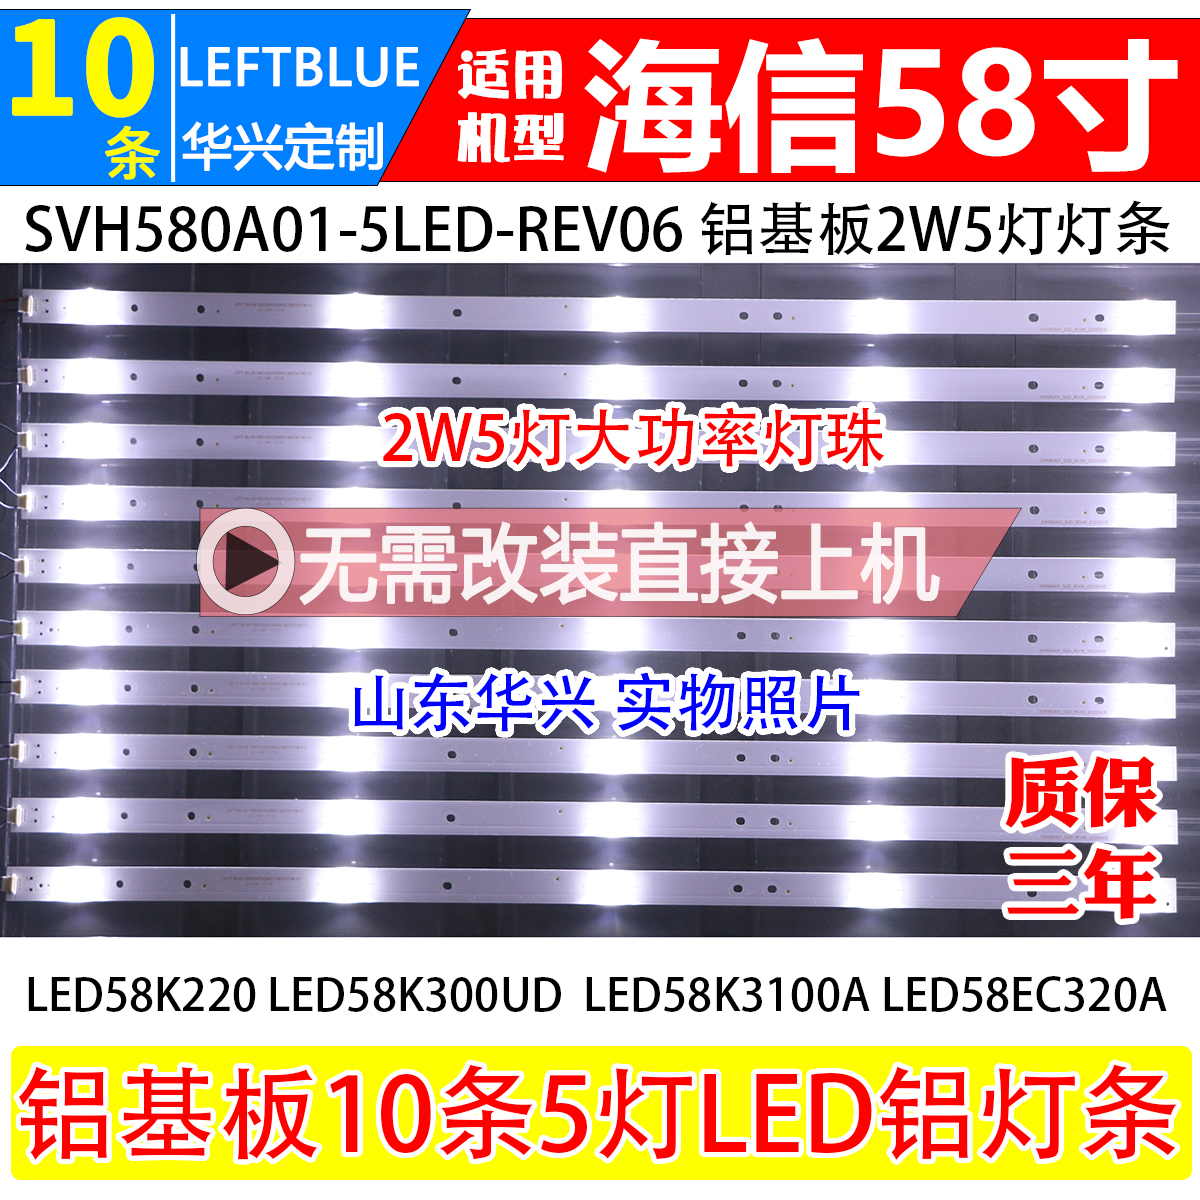 海信LED58K300UD LED58K220 LED58K3100A LED58EC320A灯条电视LED